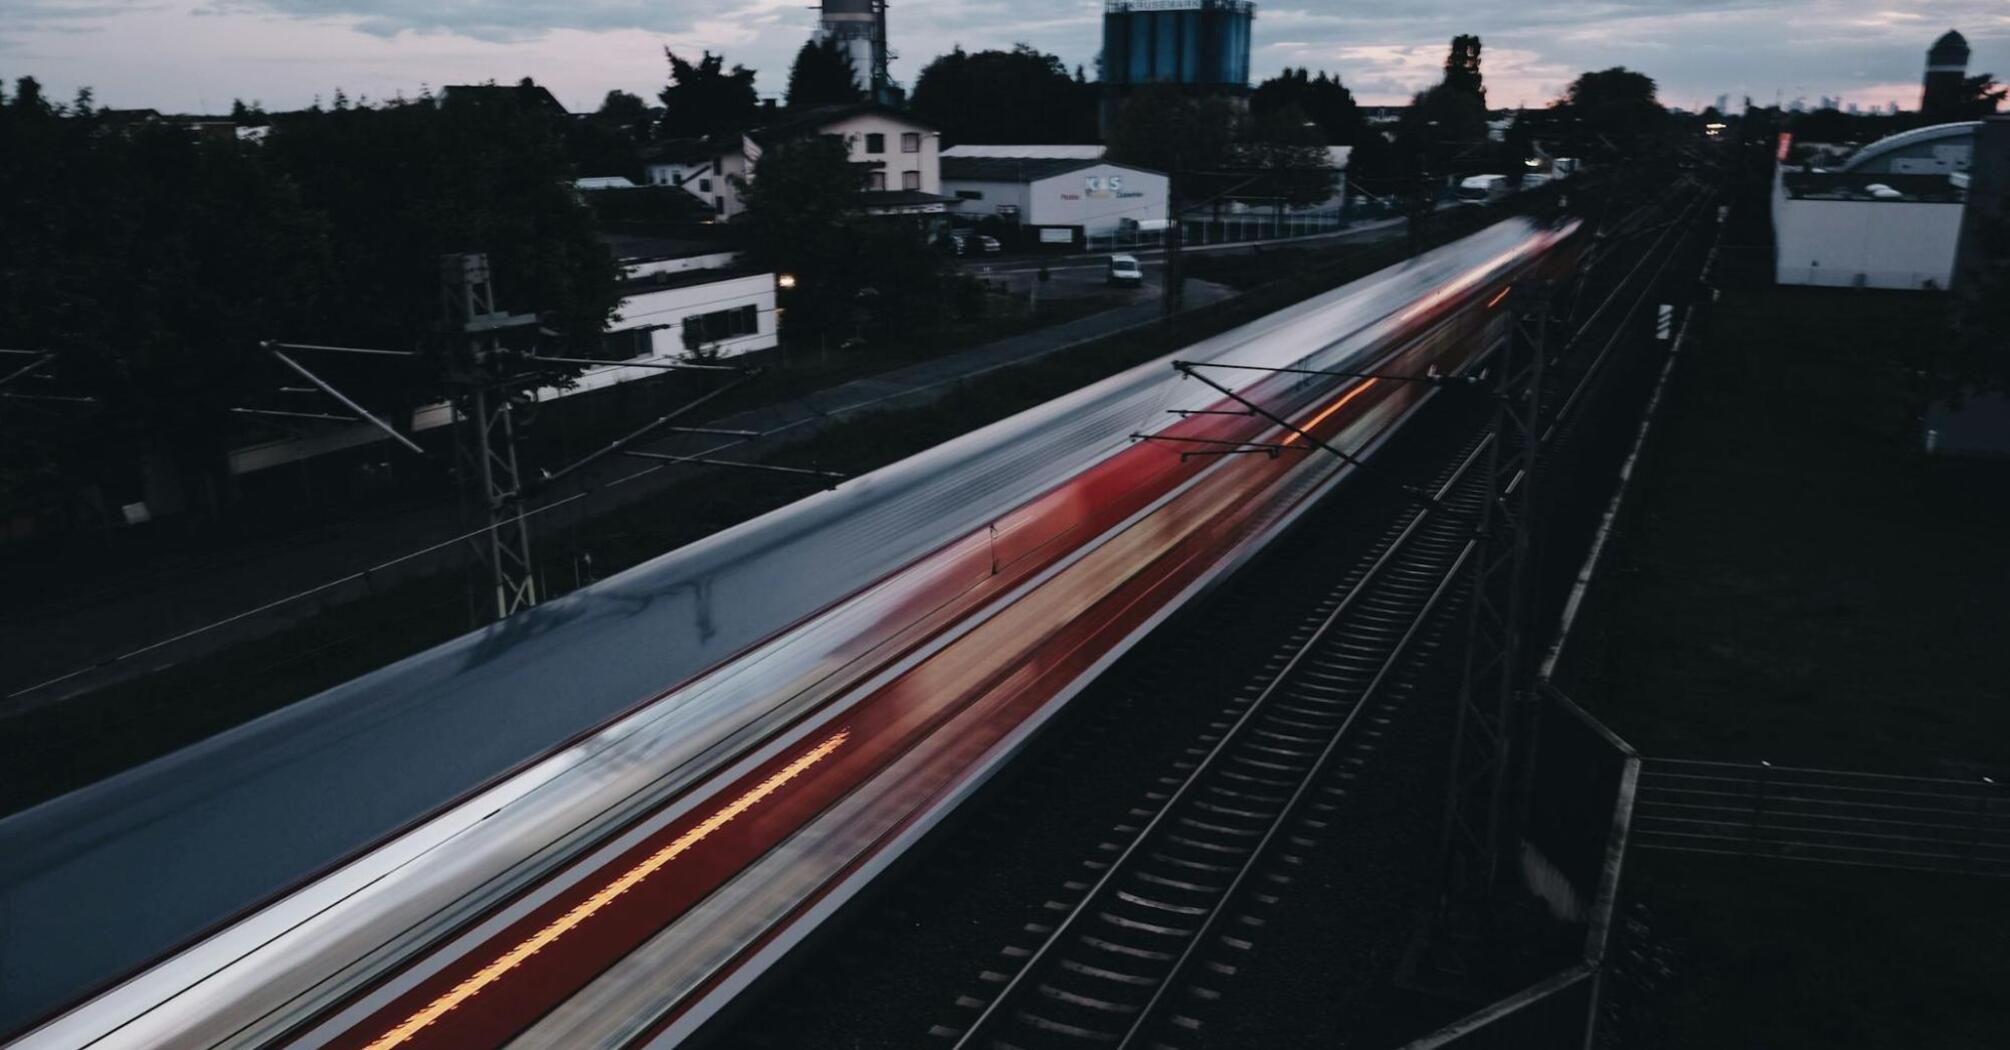  A train speeding through a suburban area during twilight